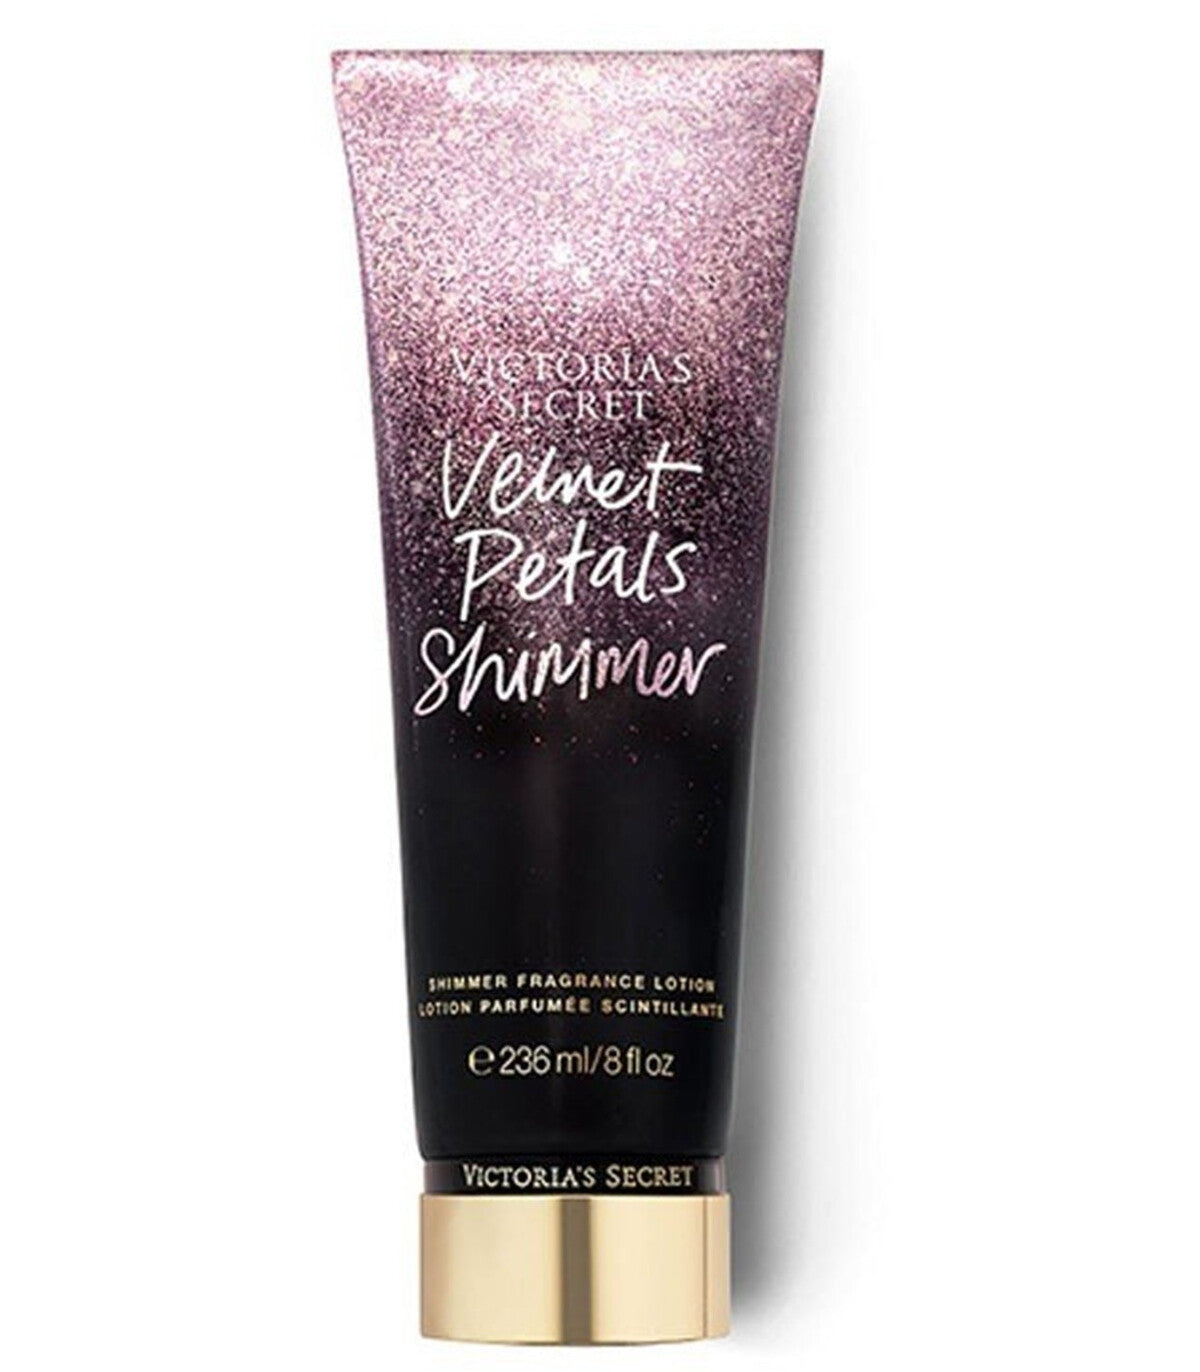 Velvet Petals Shimmer Victoria Secret 236Ml Crema